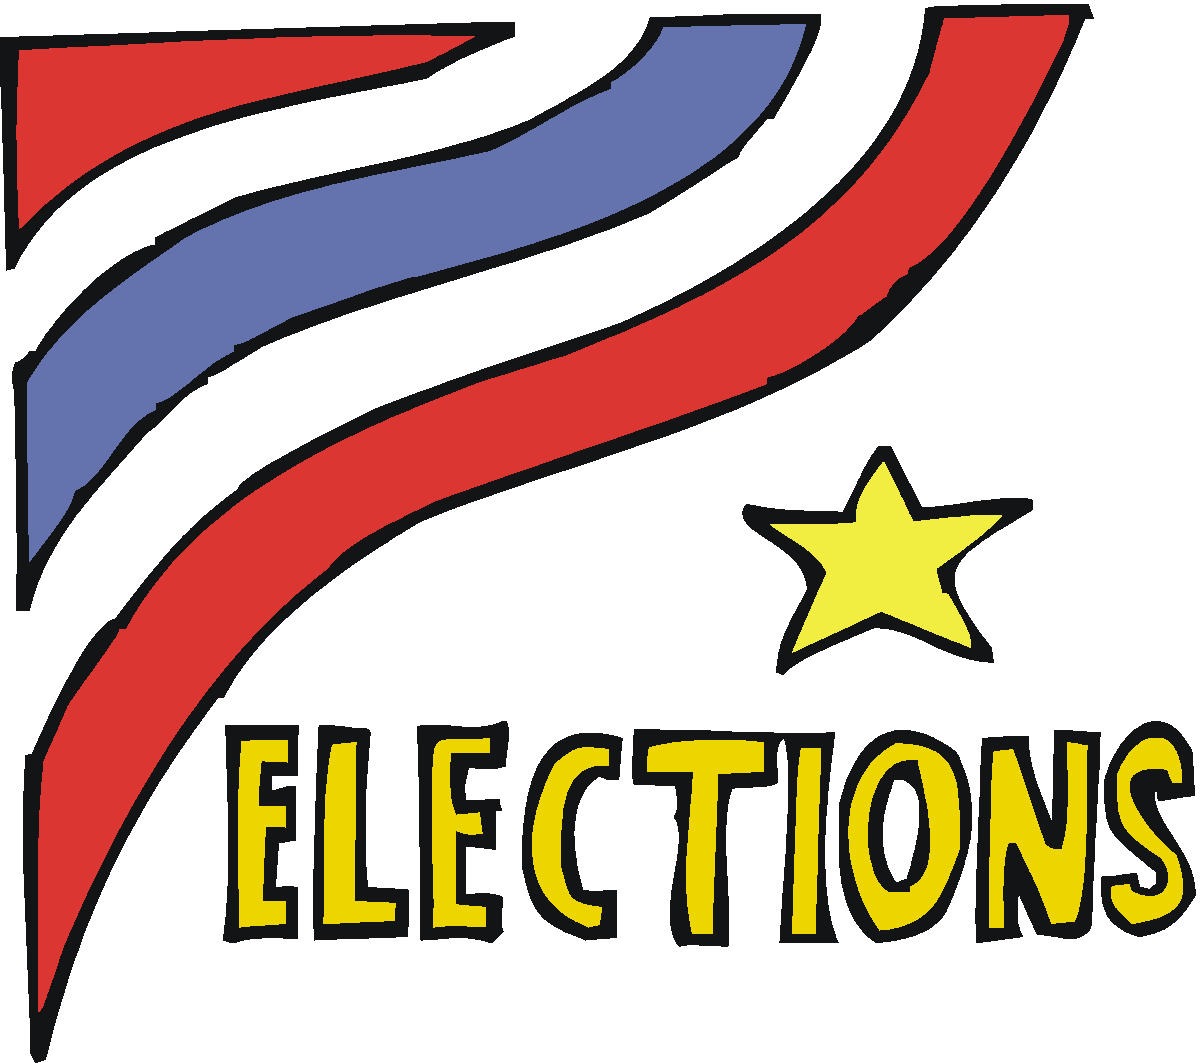 School Election Clipart